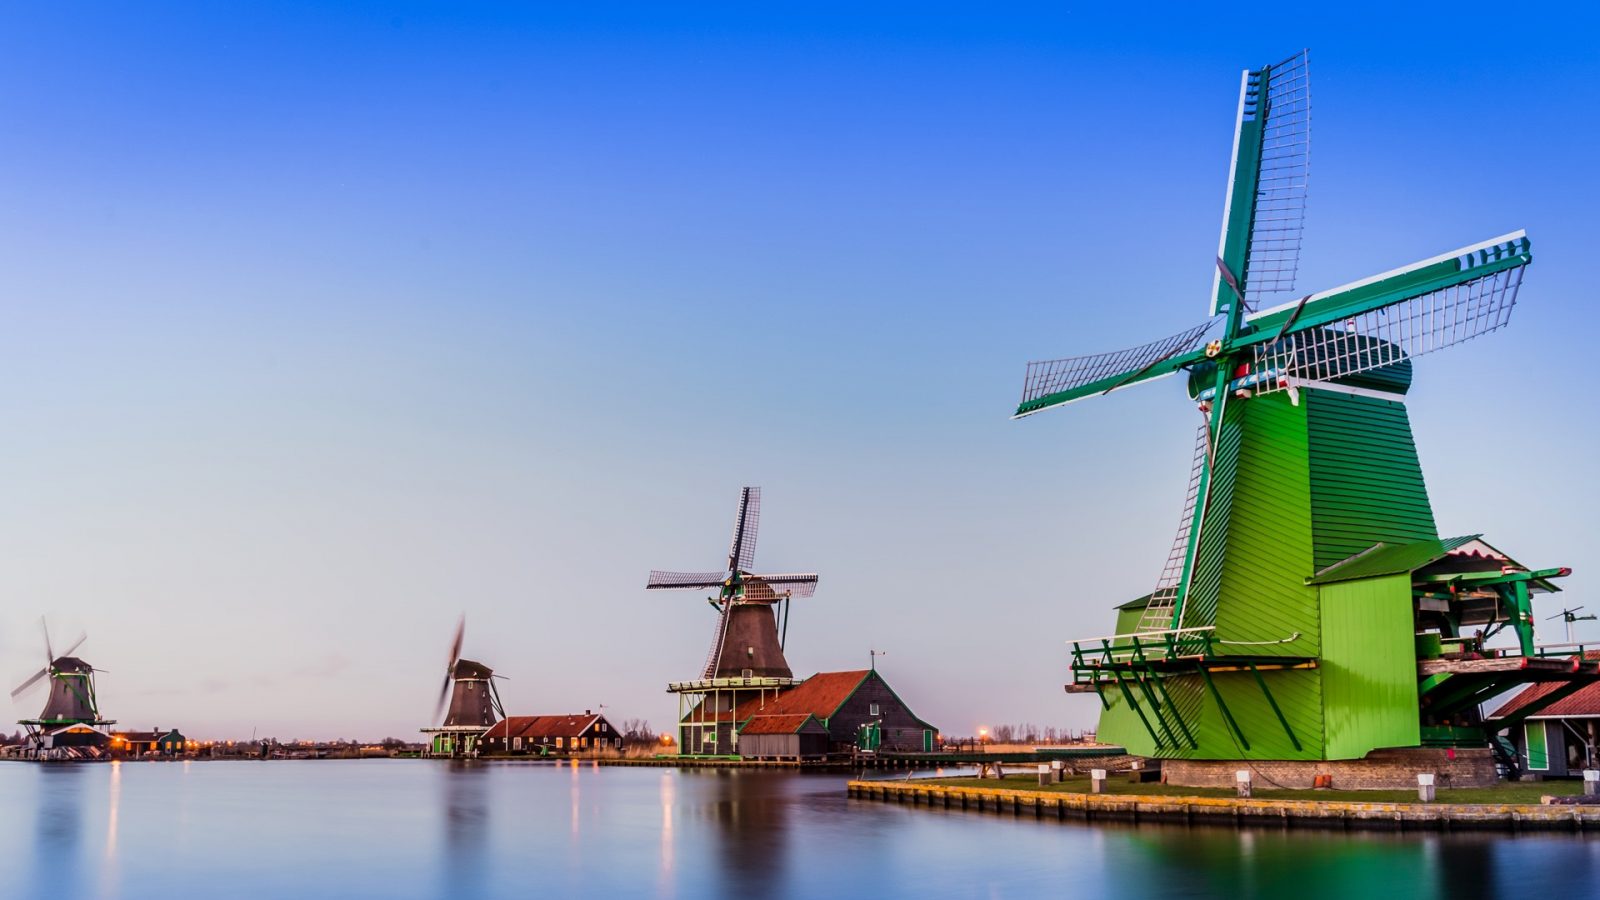 Zaandam, Netherlands windmills